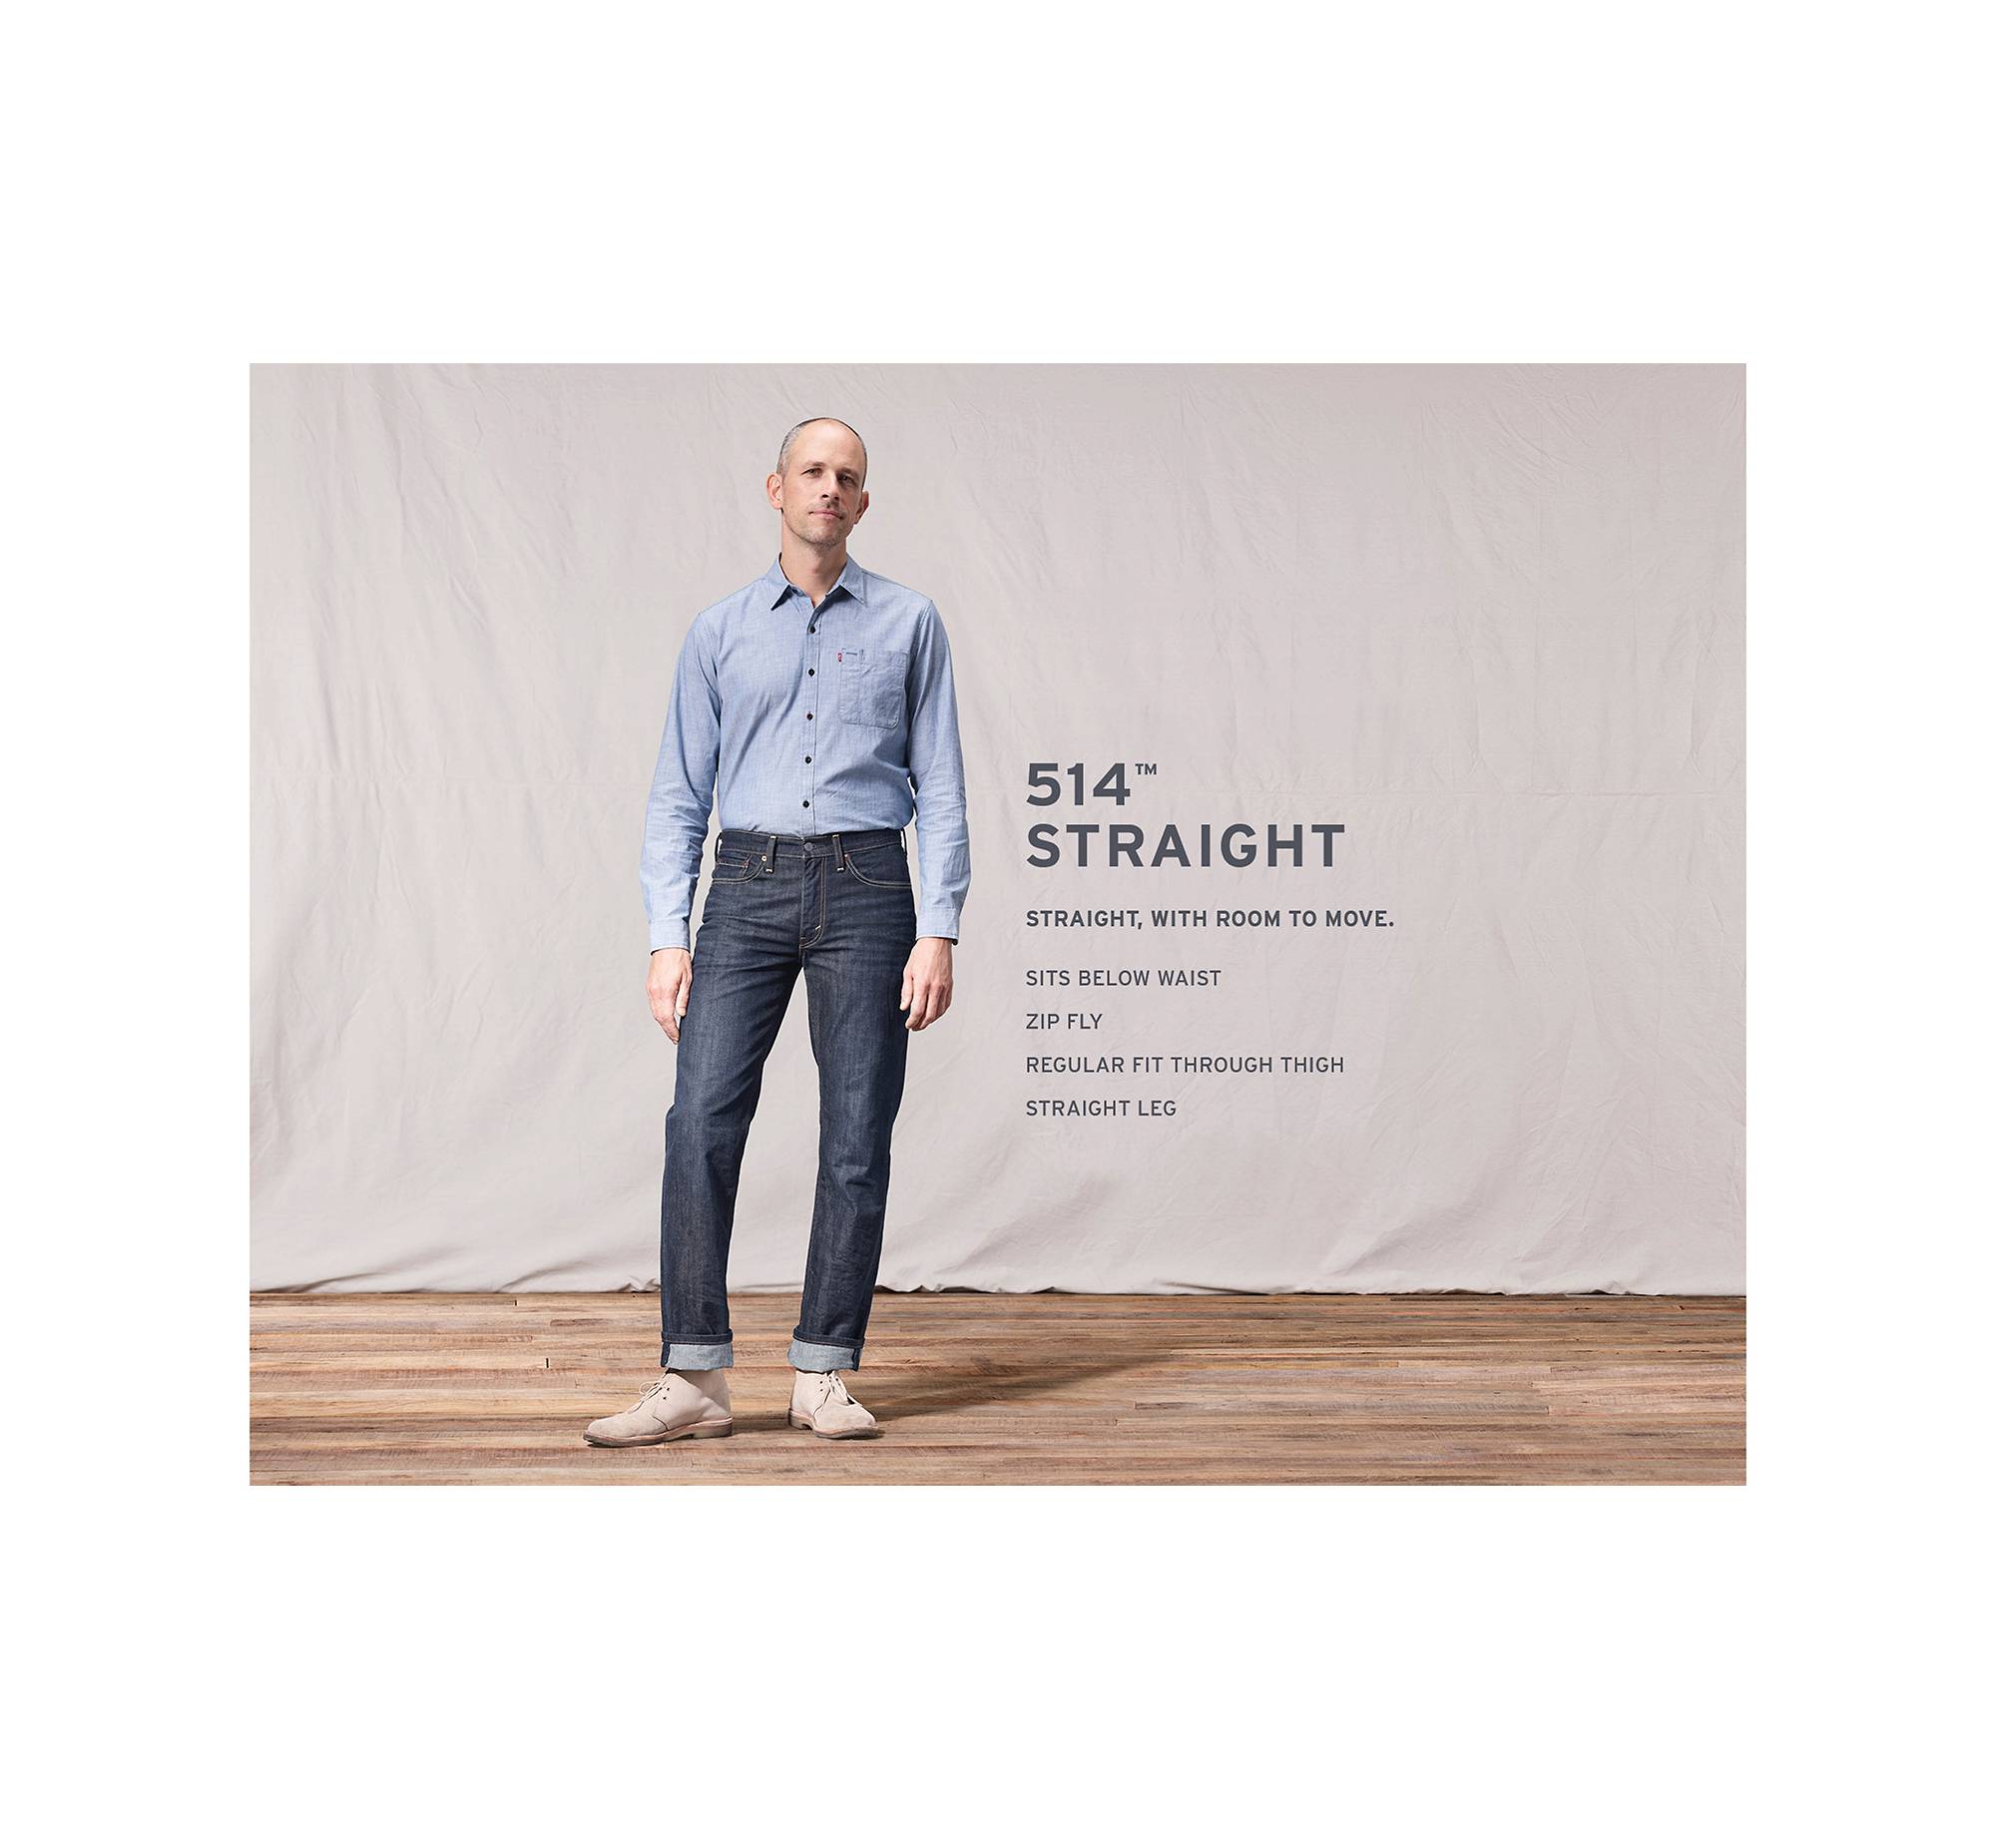 Victor skjold dvs. 514™ Straight Fit Men's Jeans - Medium Wash | Levi's® US